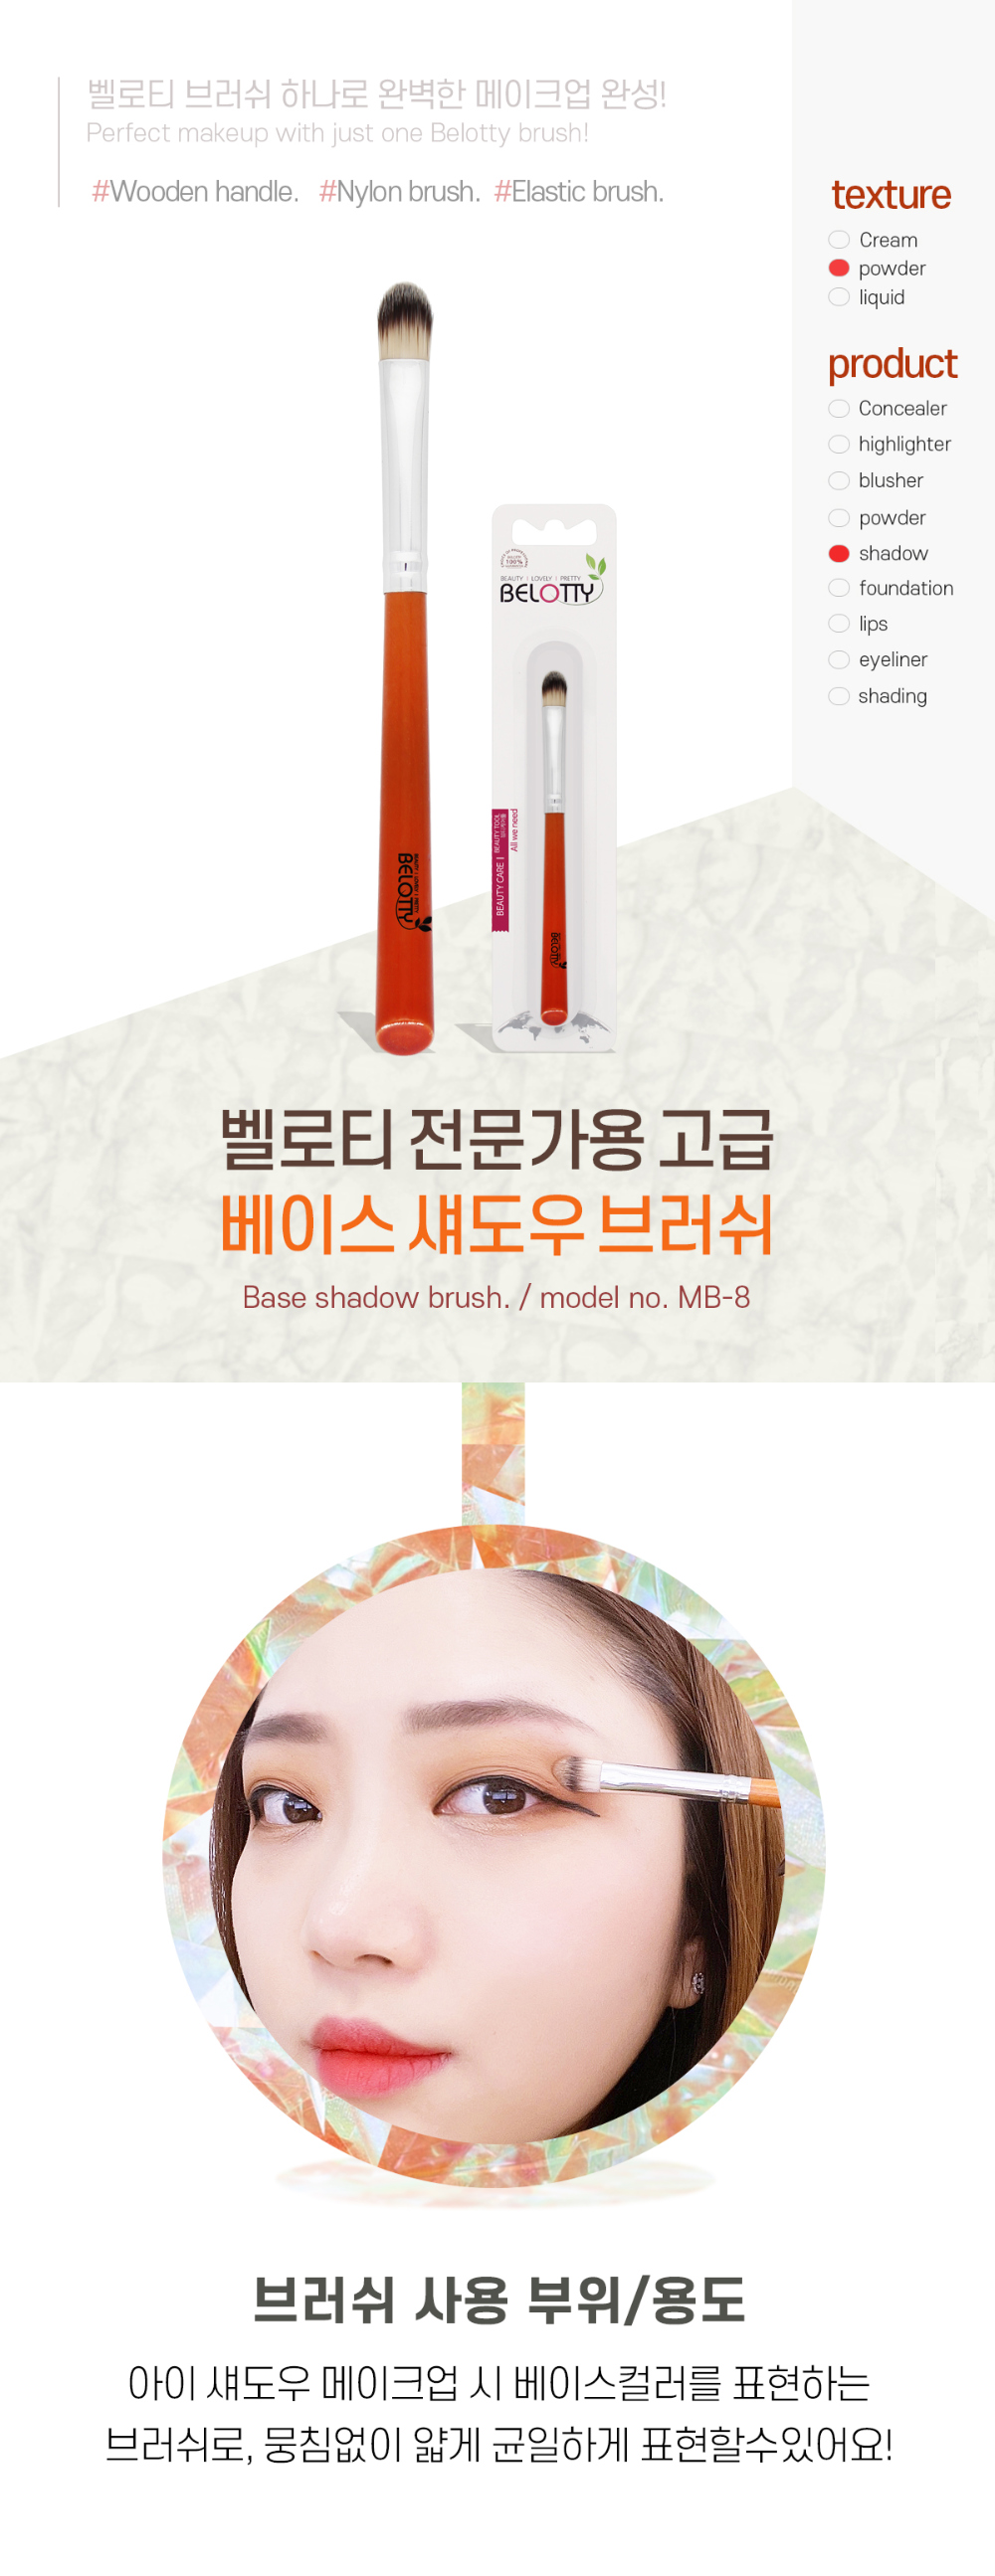 cosmetics product image-S34L1